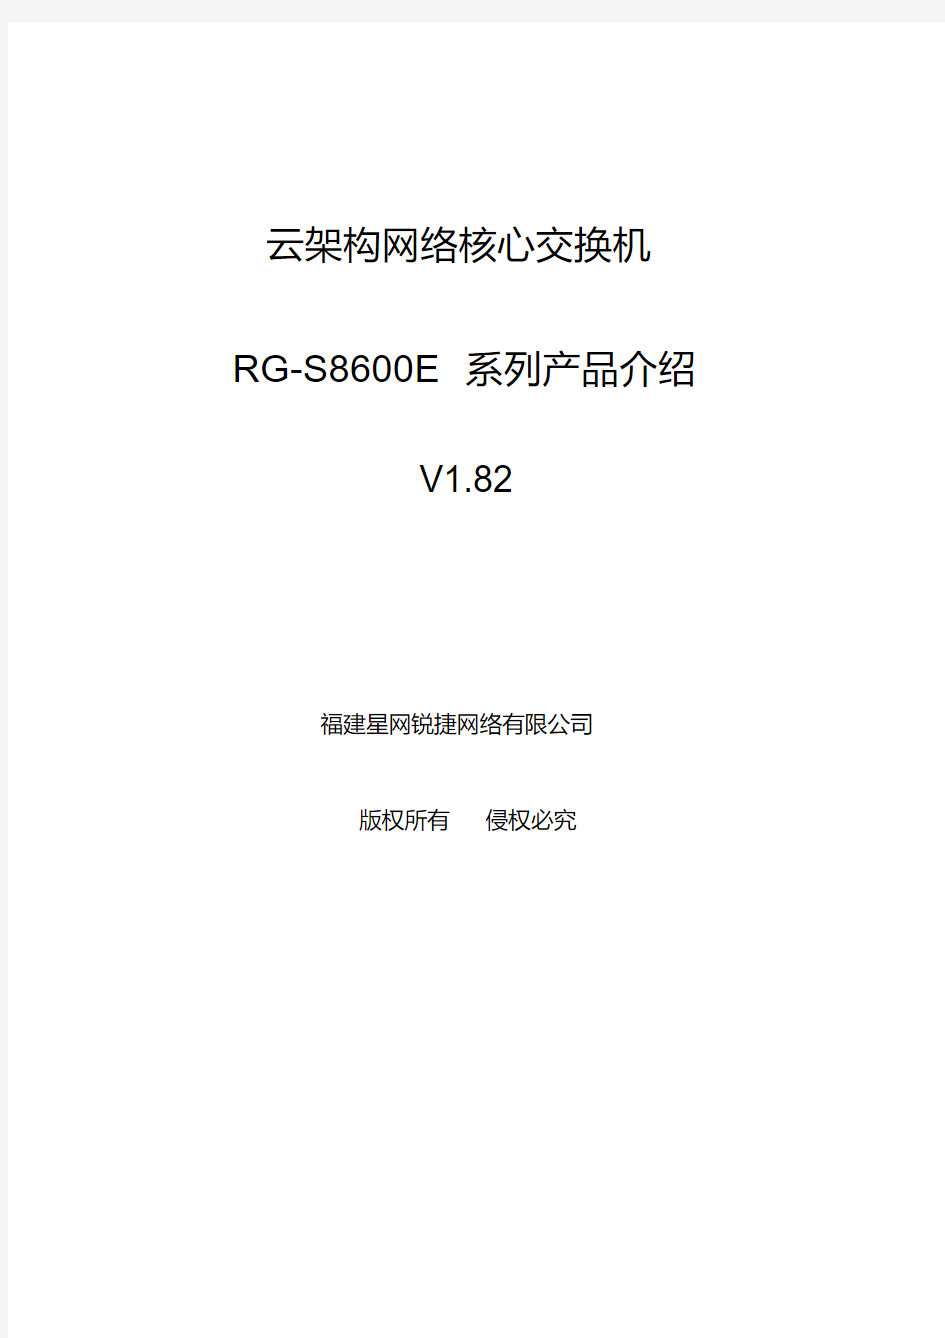 rg-s86e云架构网络核心交换机产品介绍(v1.82)